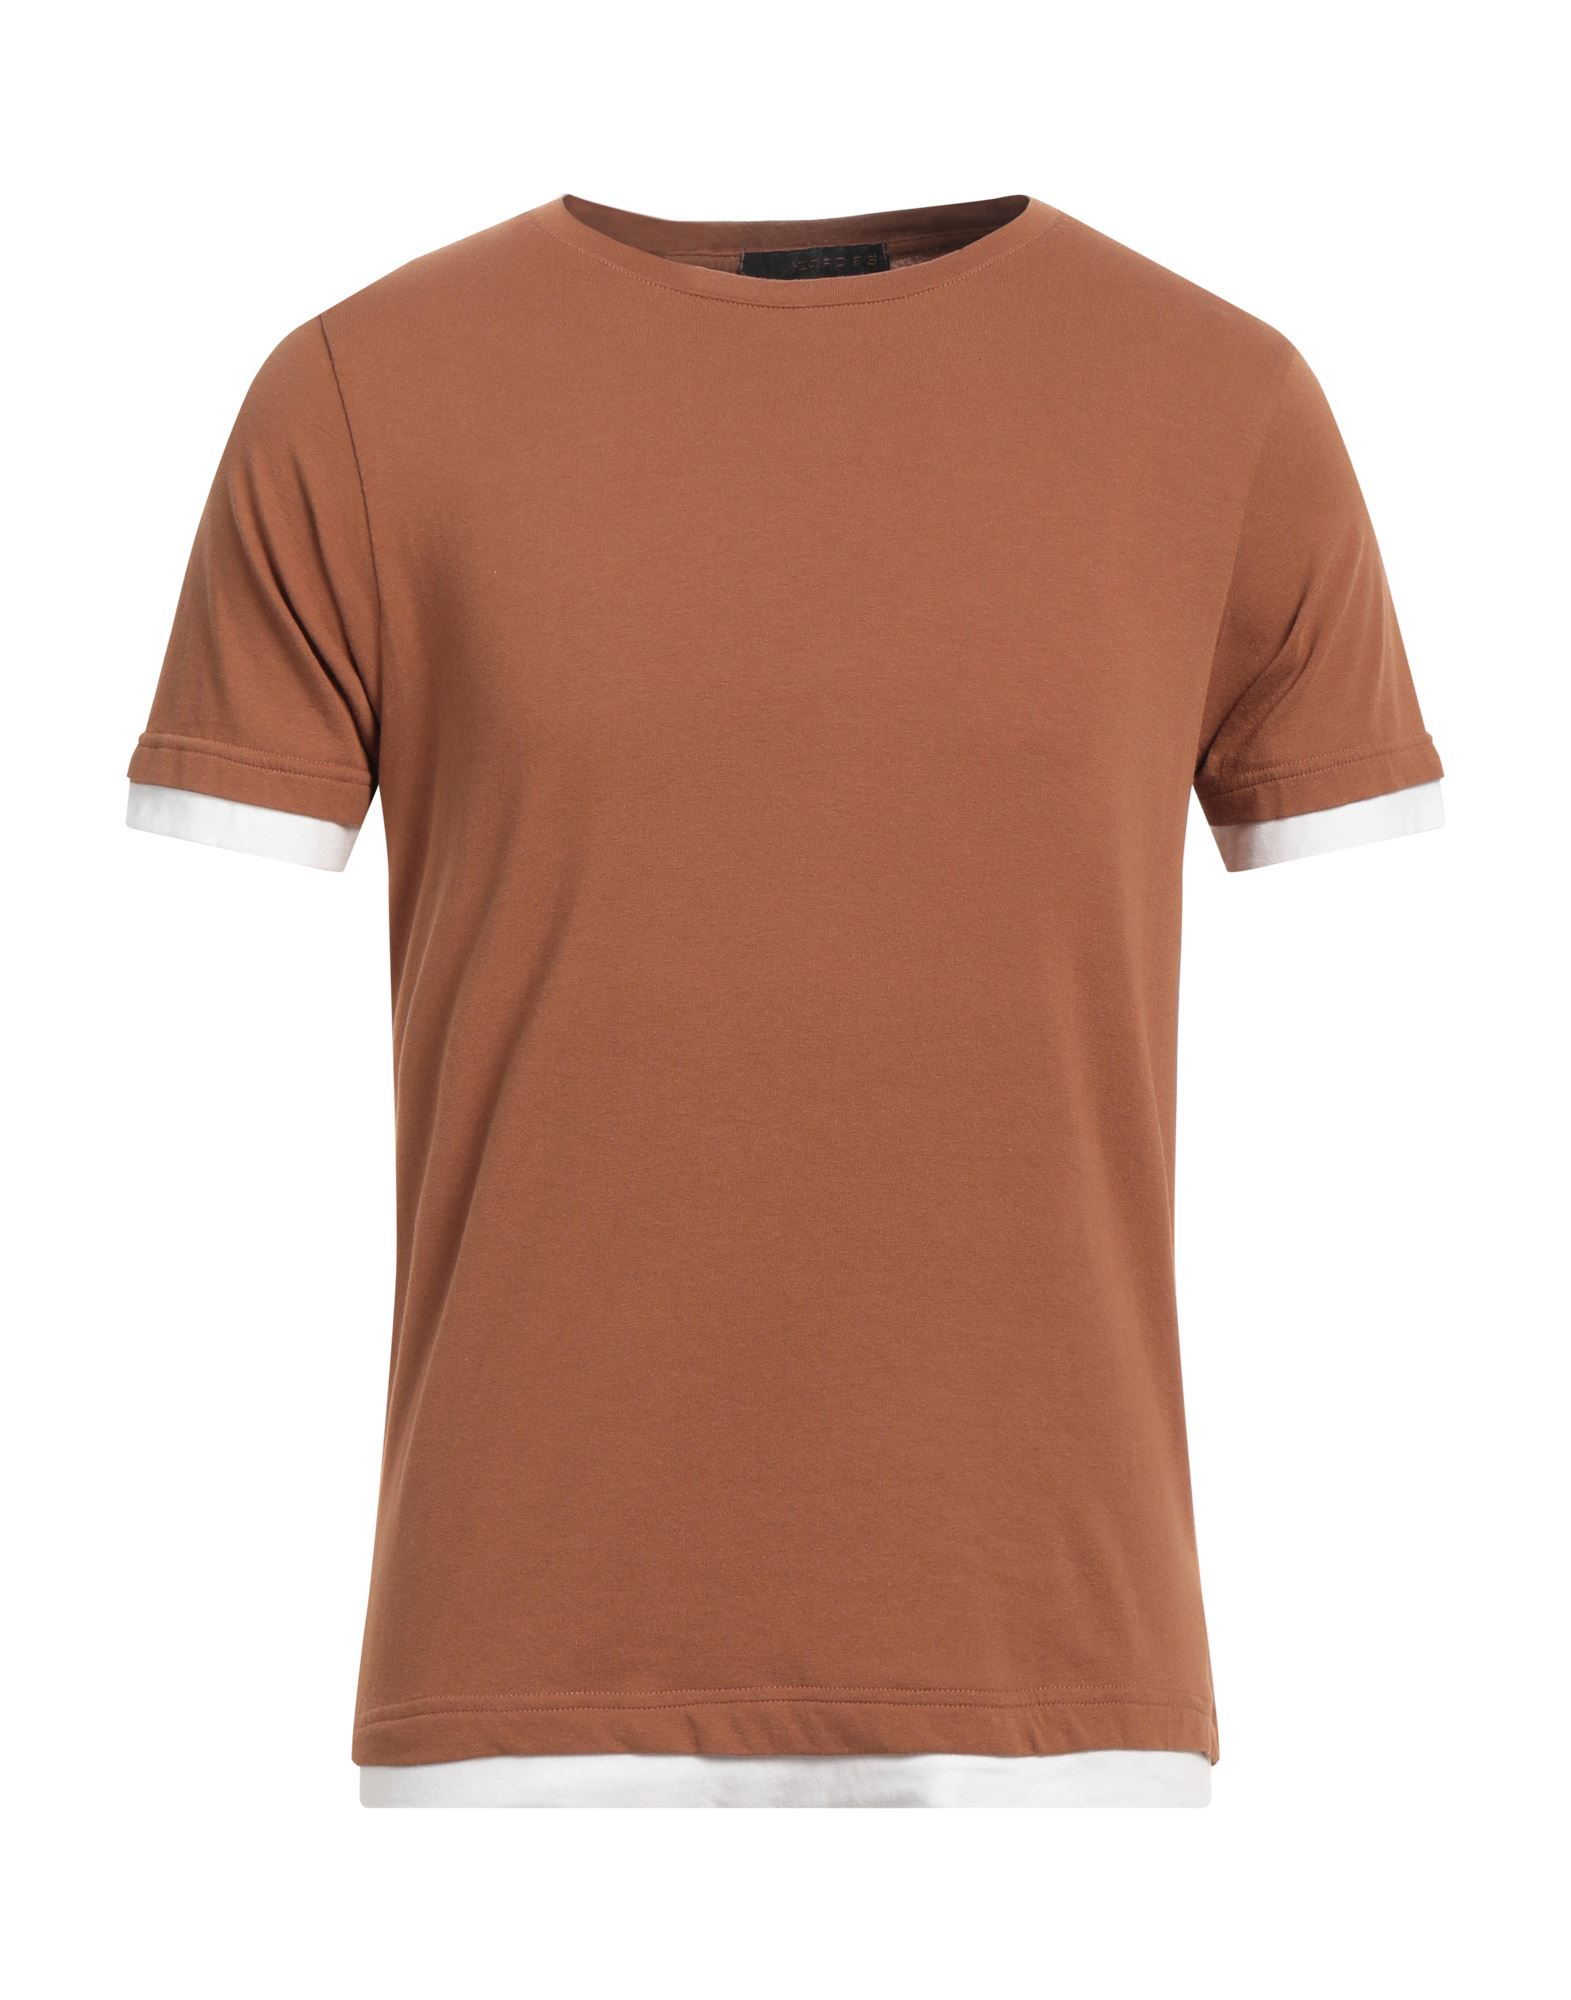 Jeordie's Man T-shirt Brown Size Xxl Cotton, Elastane